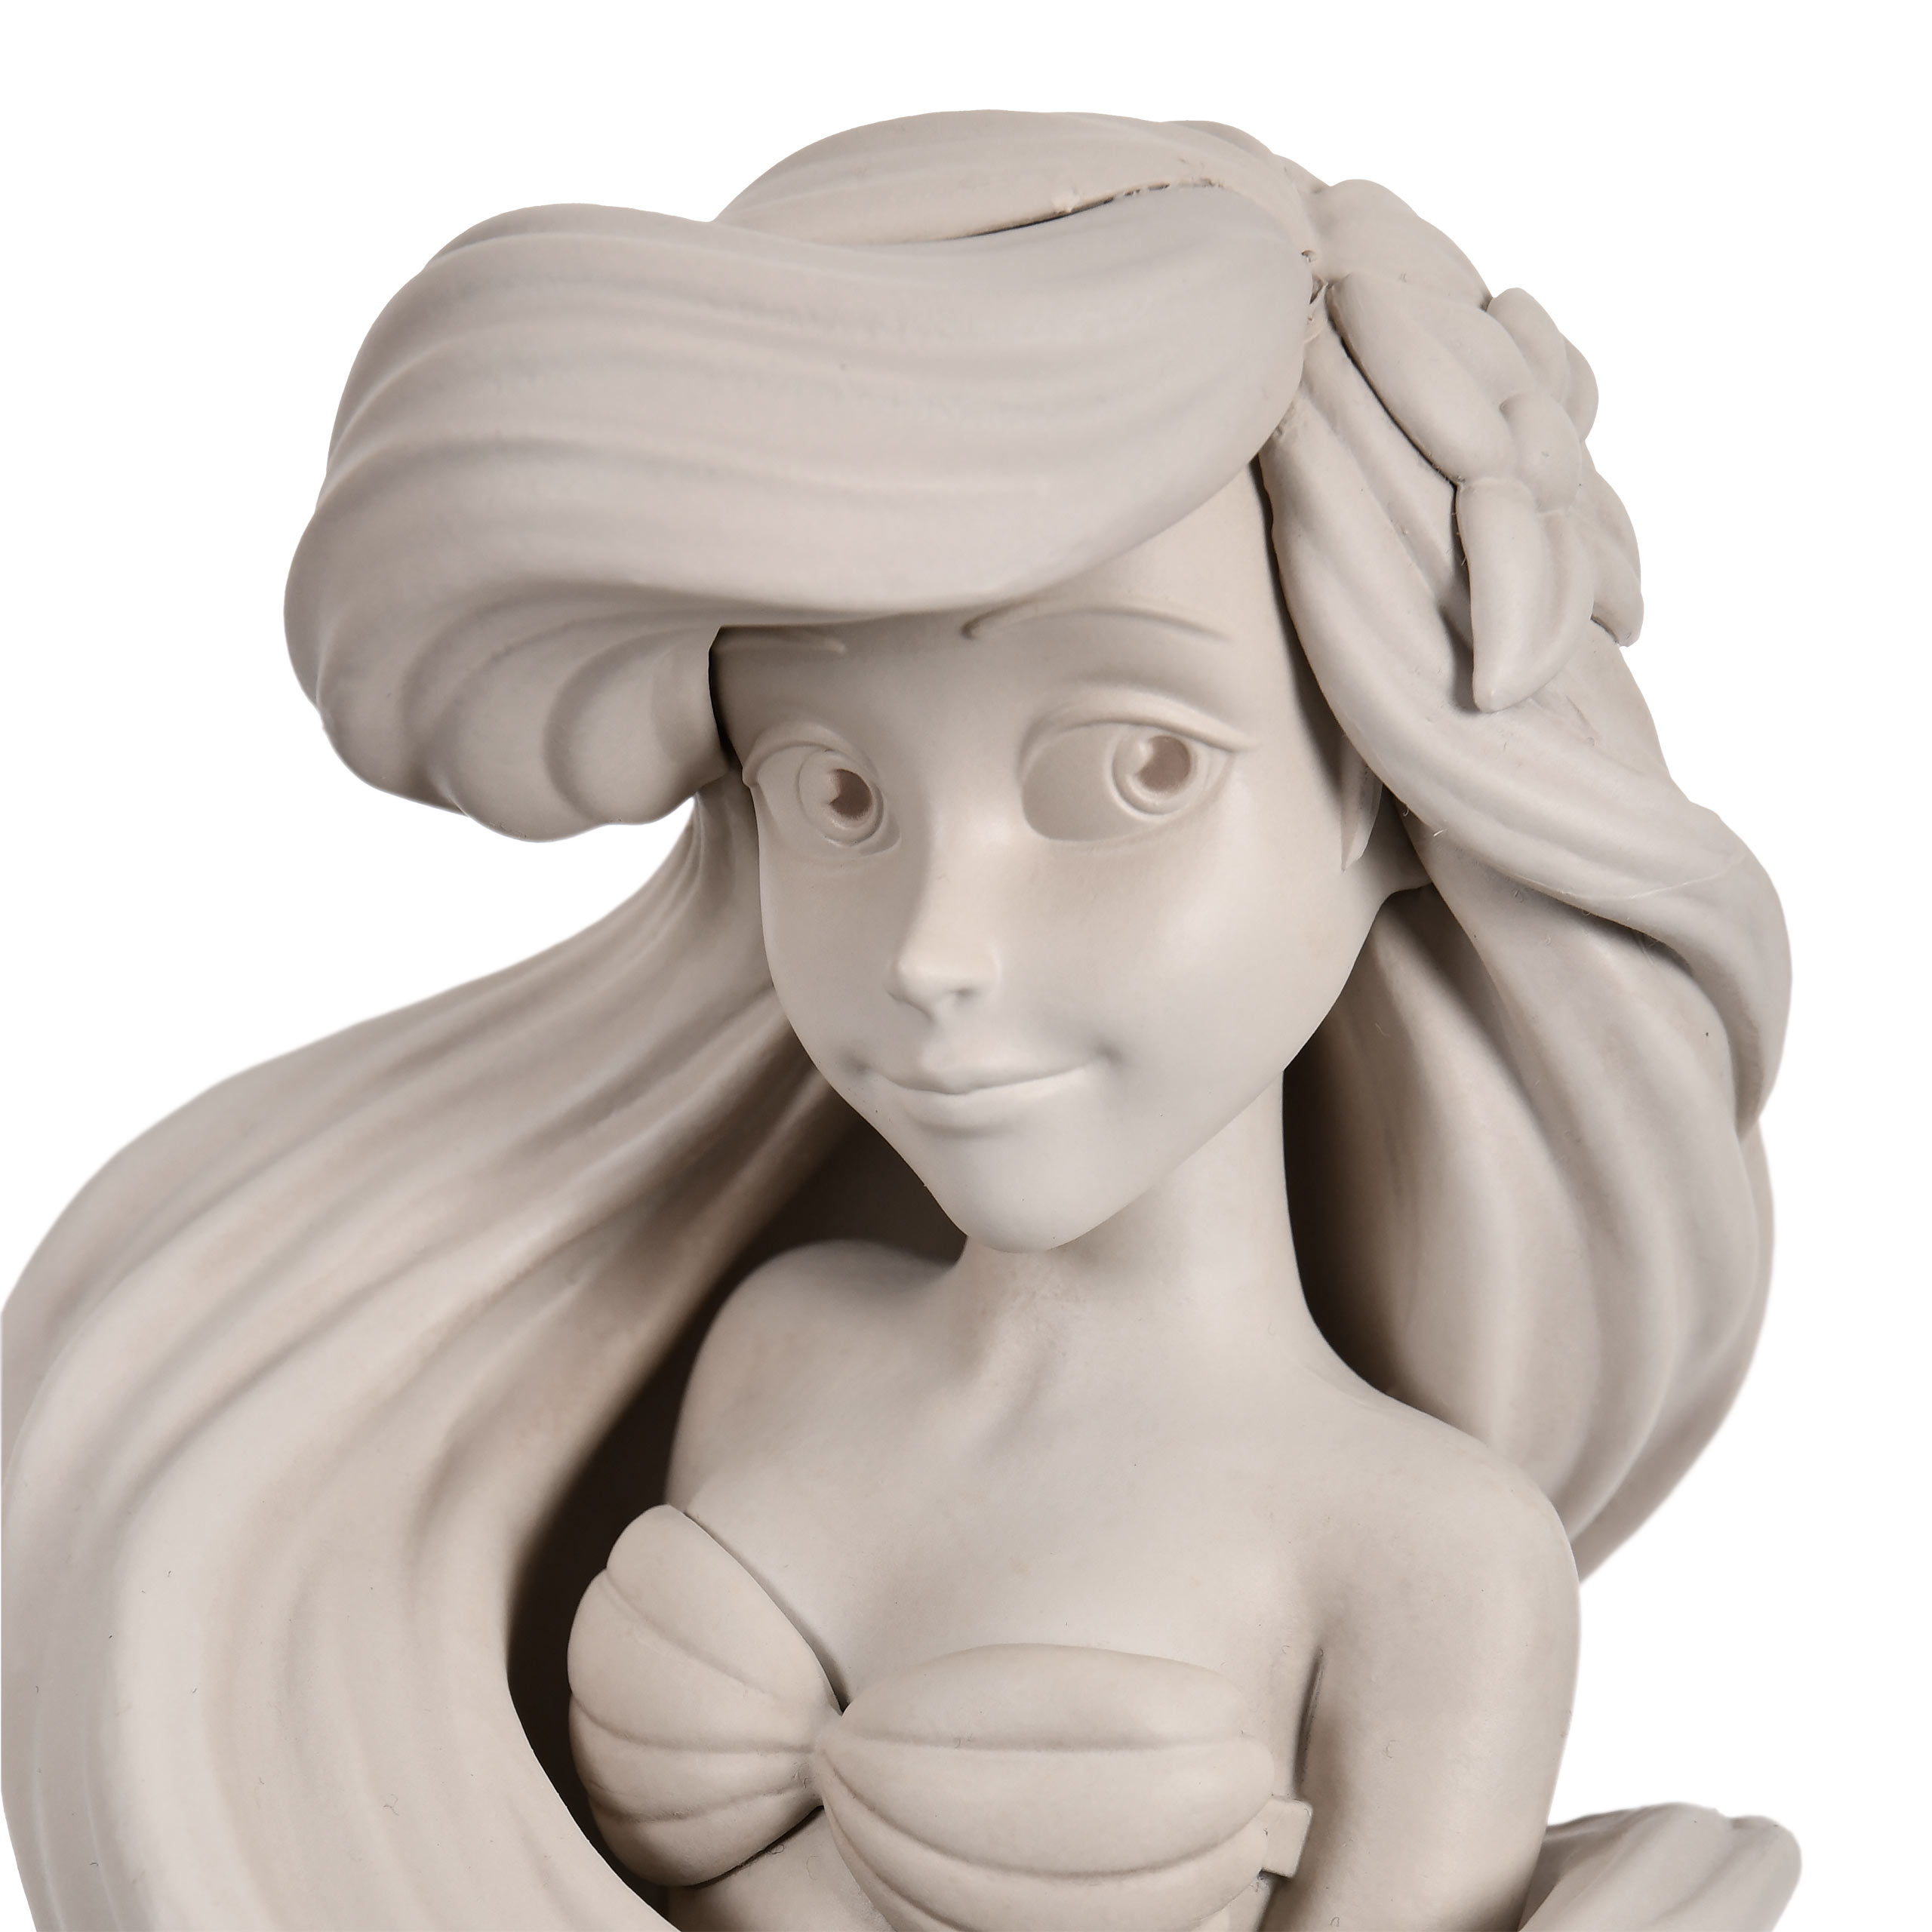 Ariel-The Little Mermaid - Disney Princess Bust